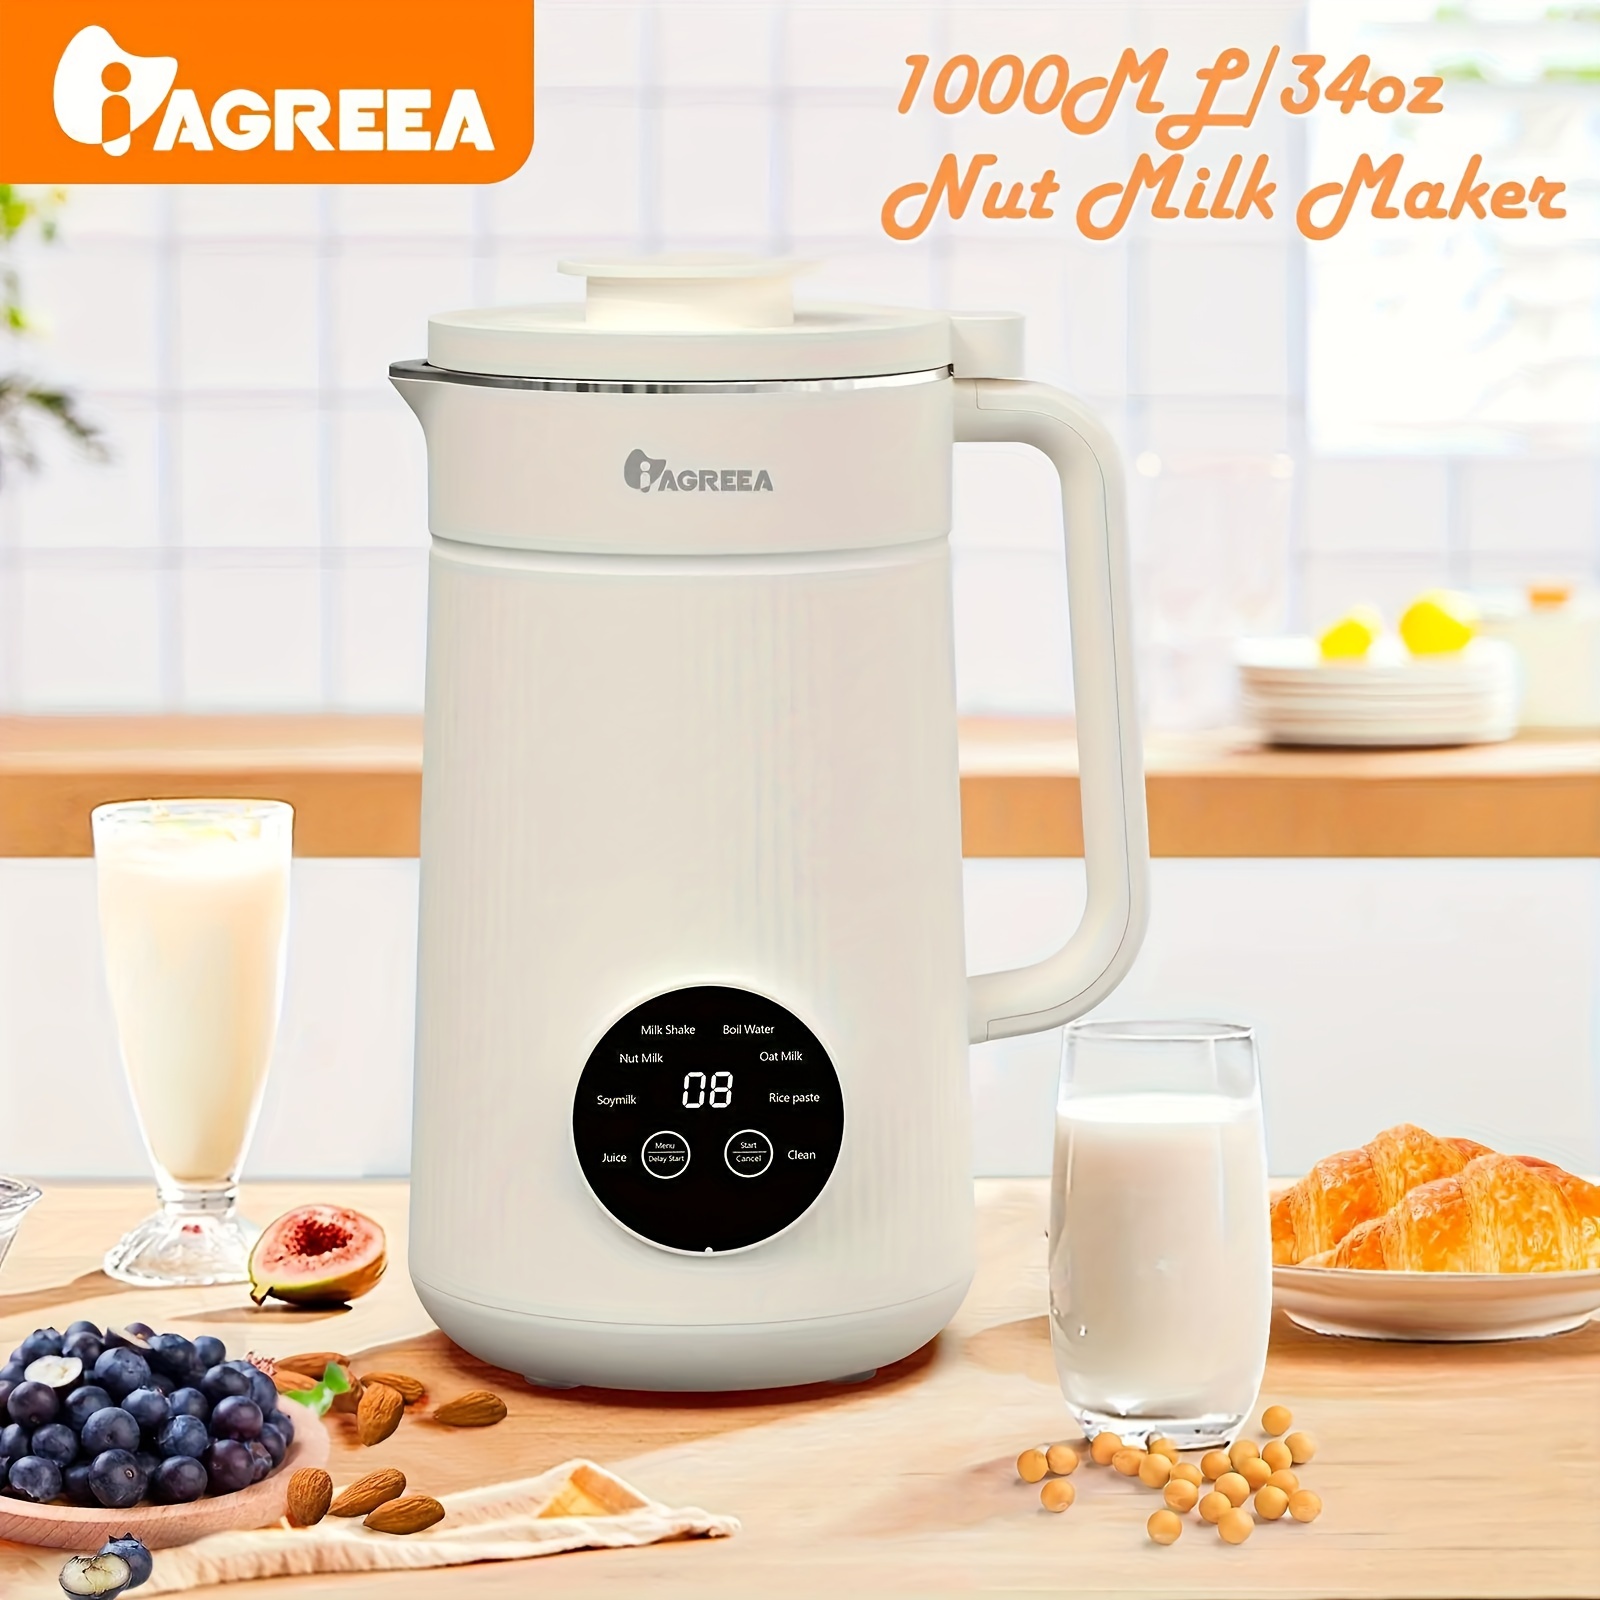 34oz/1000ml Heavy-Duty Blender - Make Delicious Soy Milk, Nut Milk, Coffee  Juice & More!